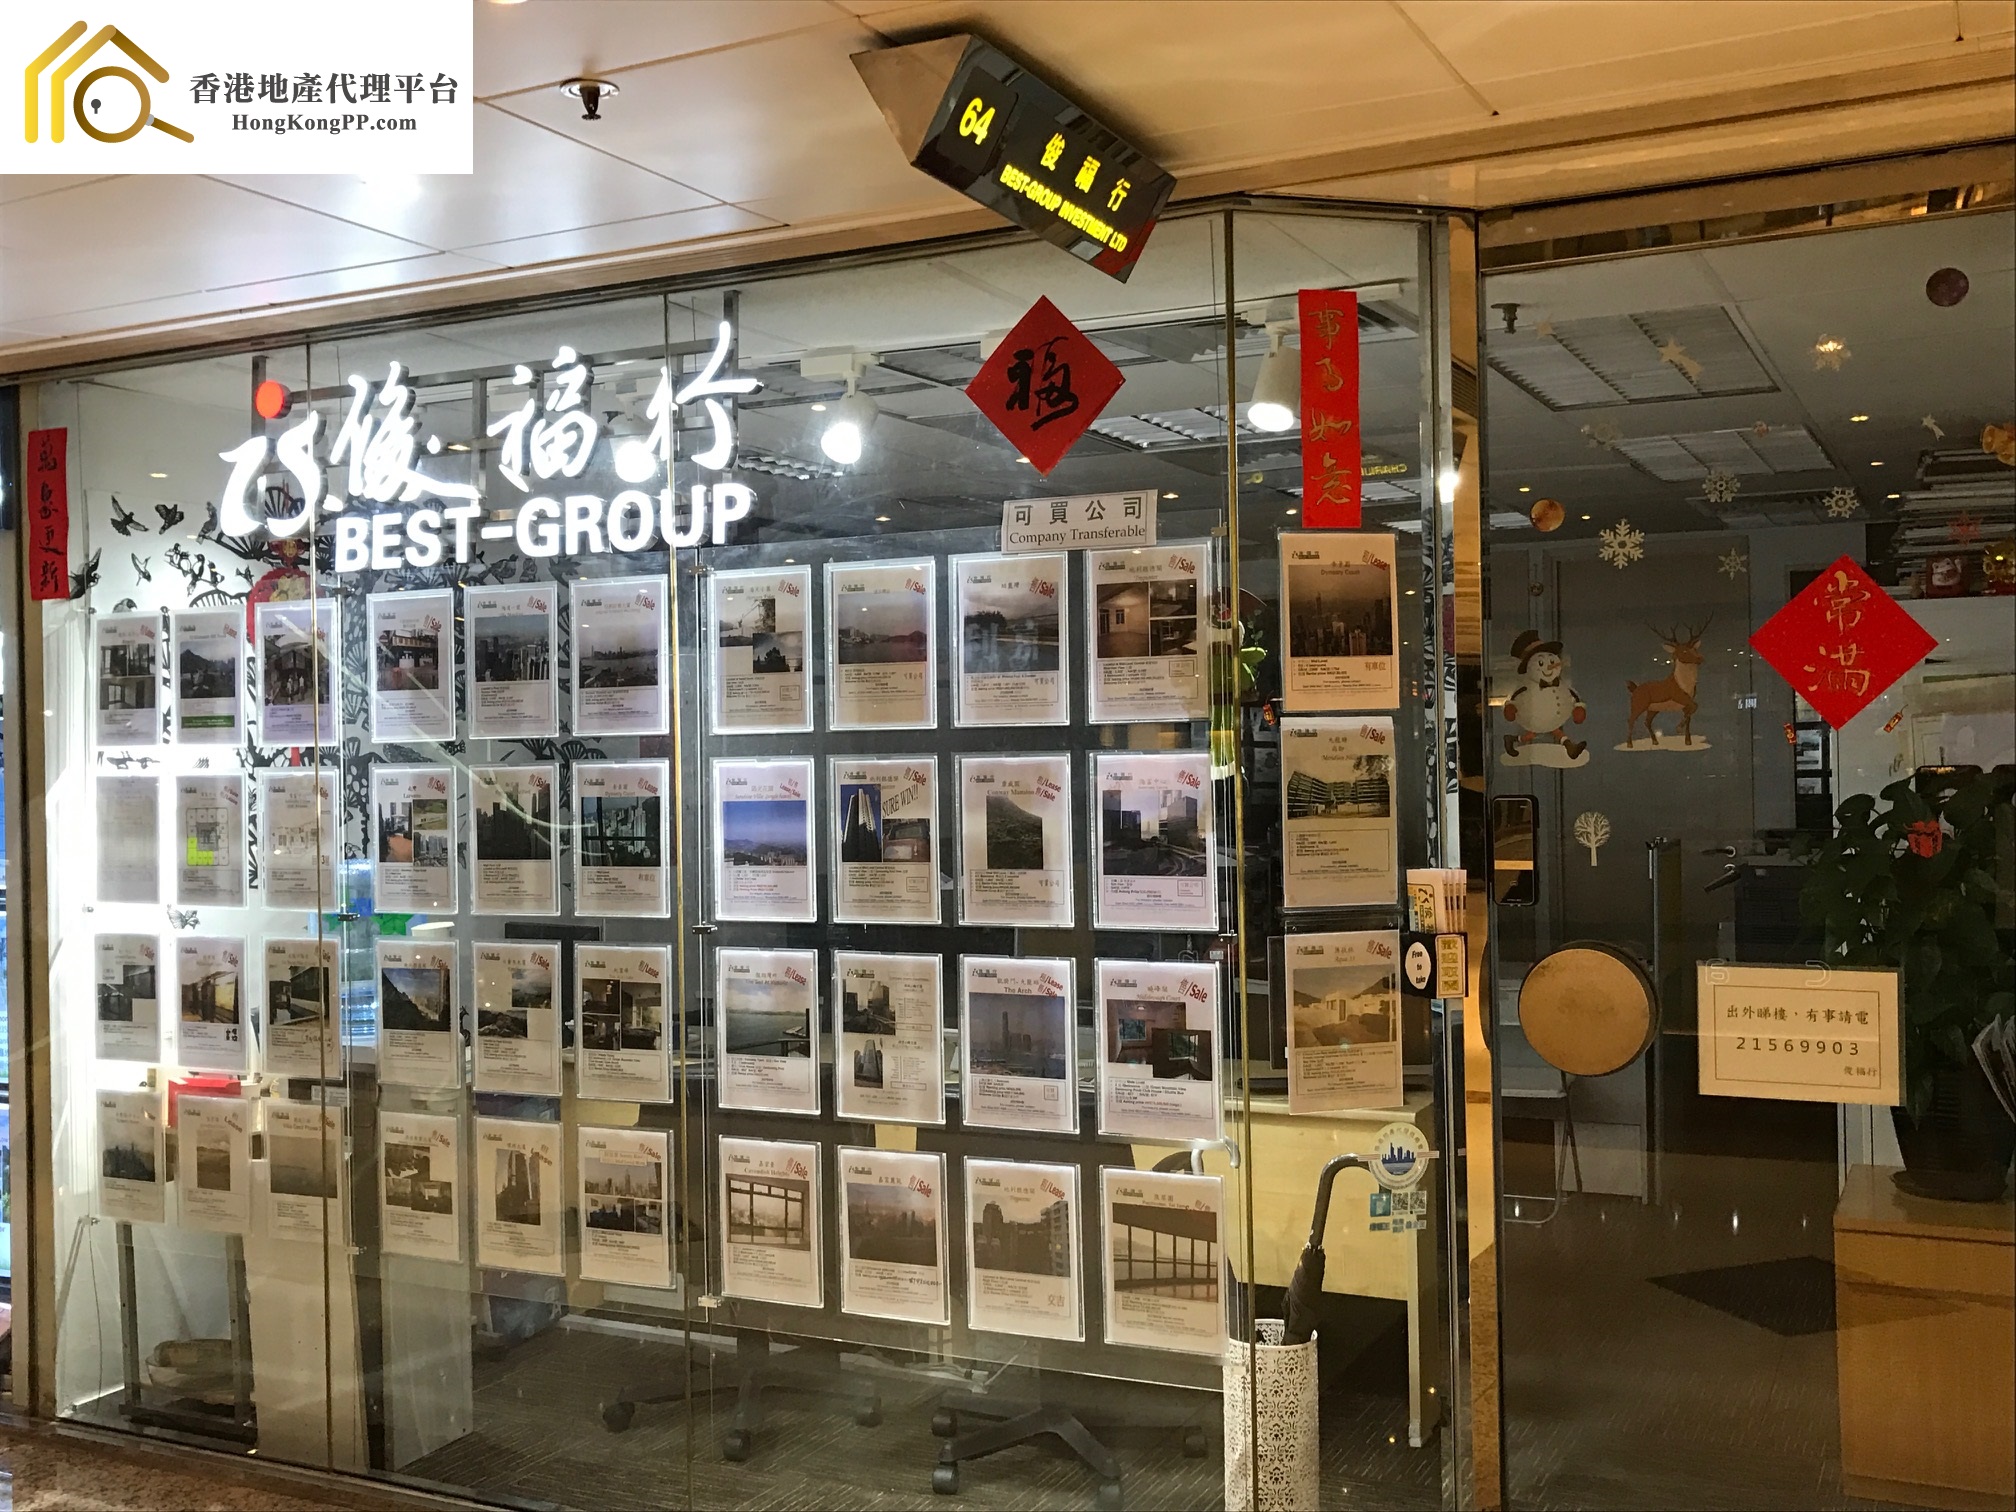 HousingEstate Agent: 俊褔行 Best-Group Investment